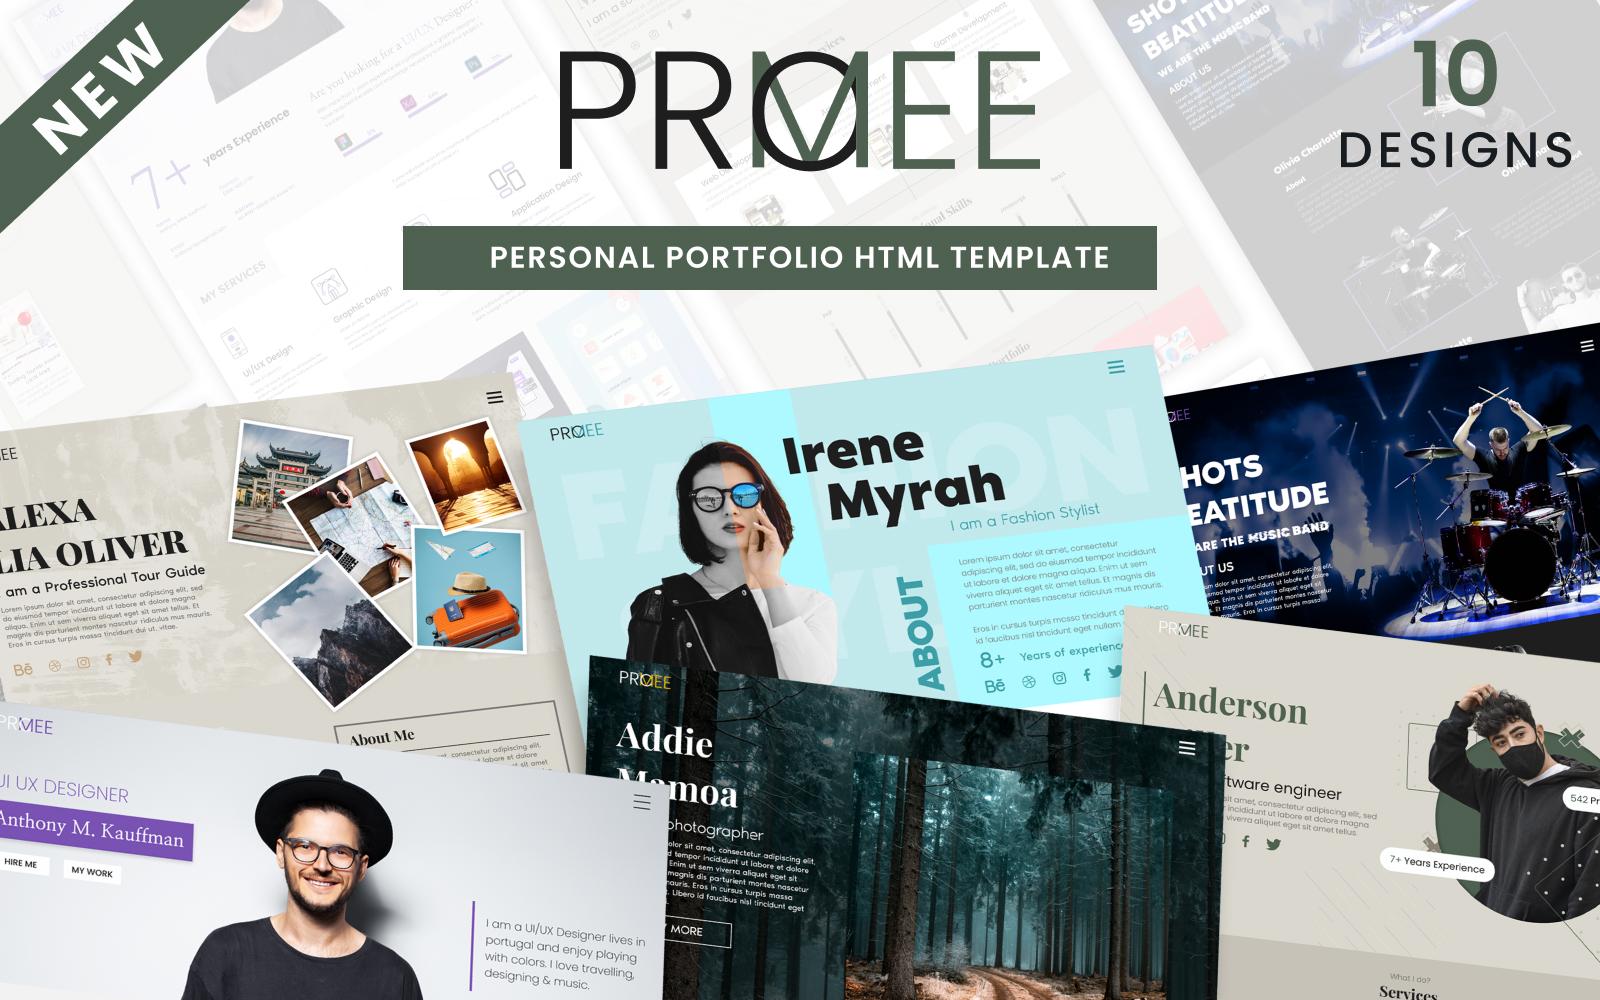 Promee – Personal Portfolio HTML5 Template